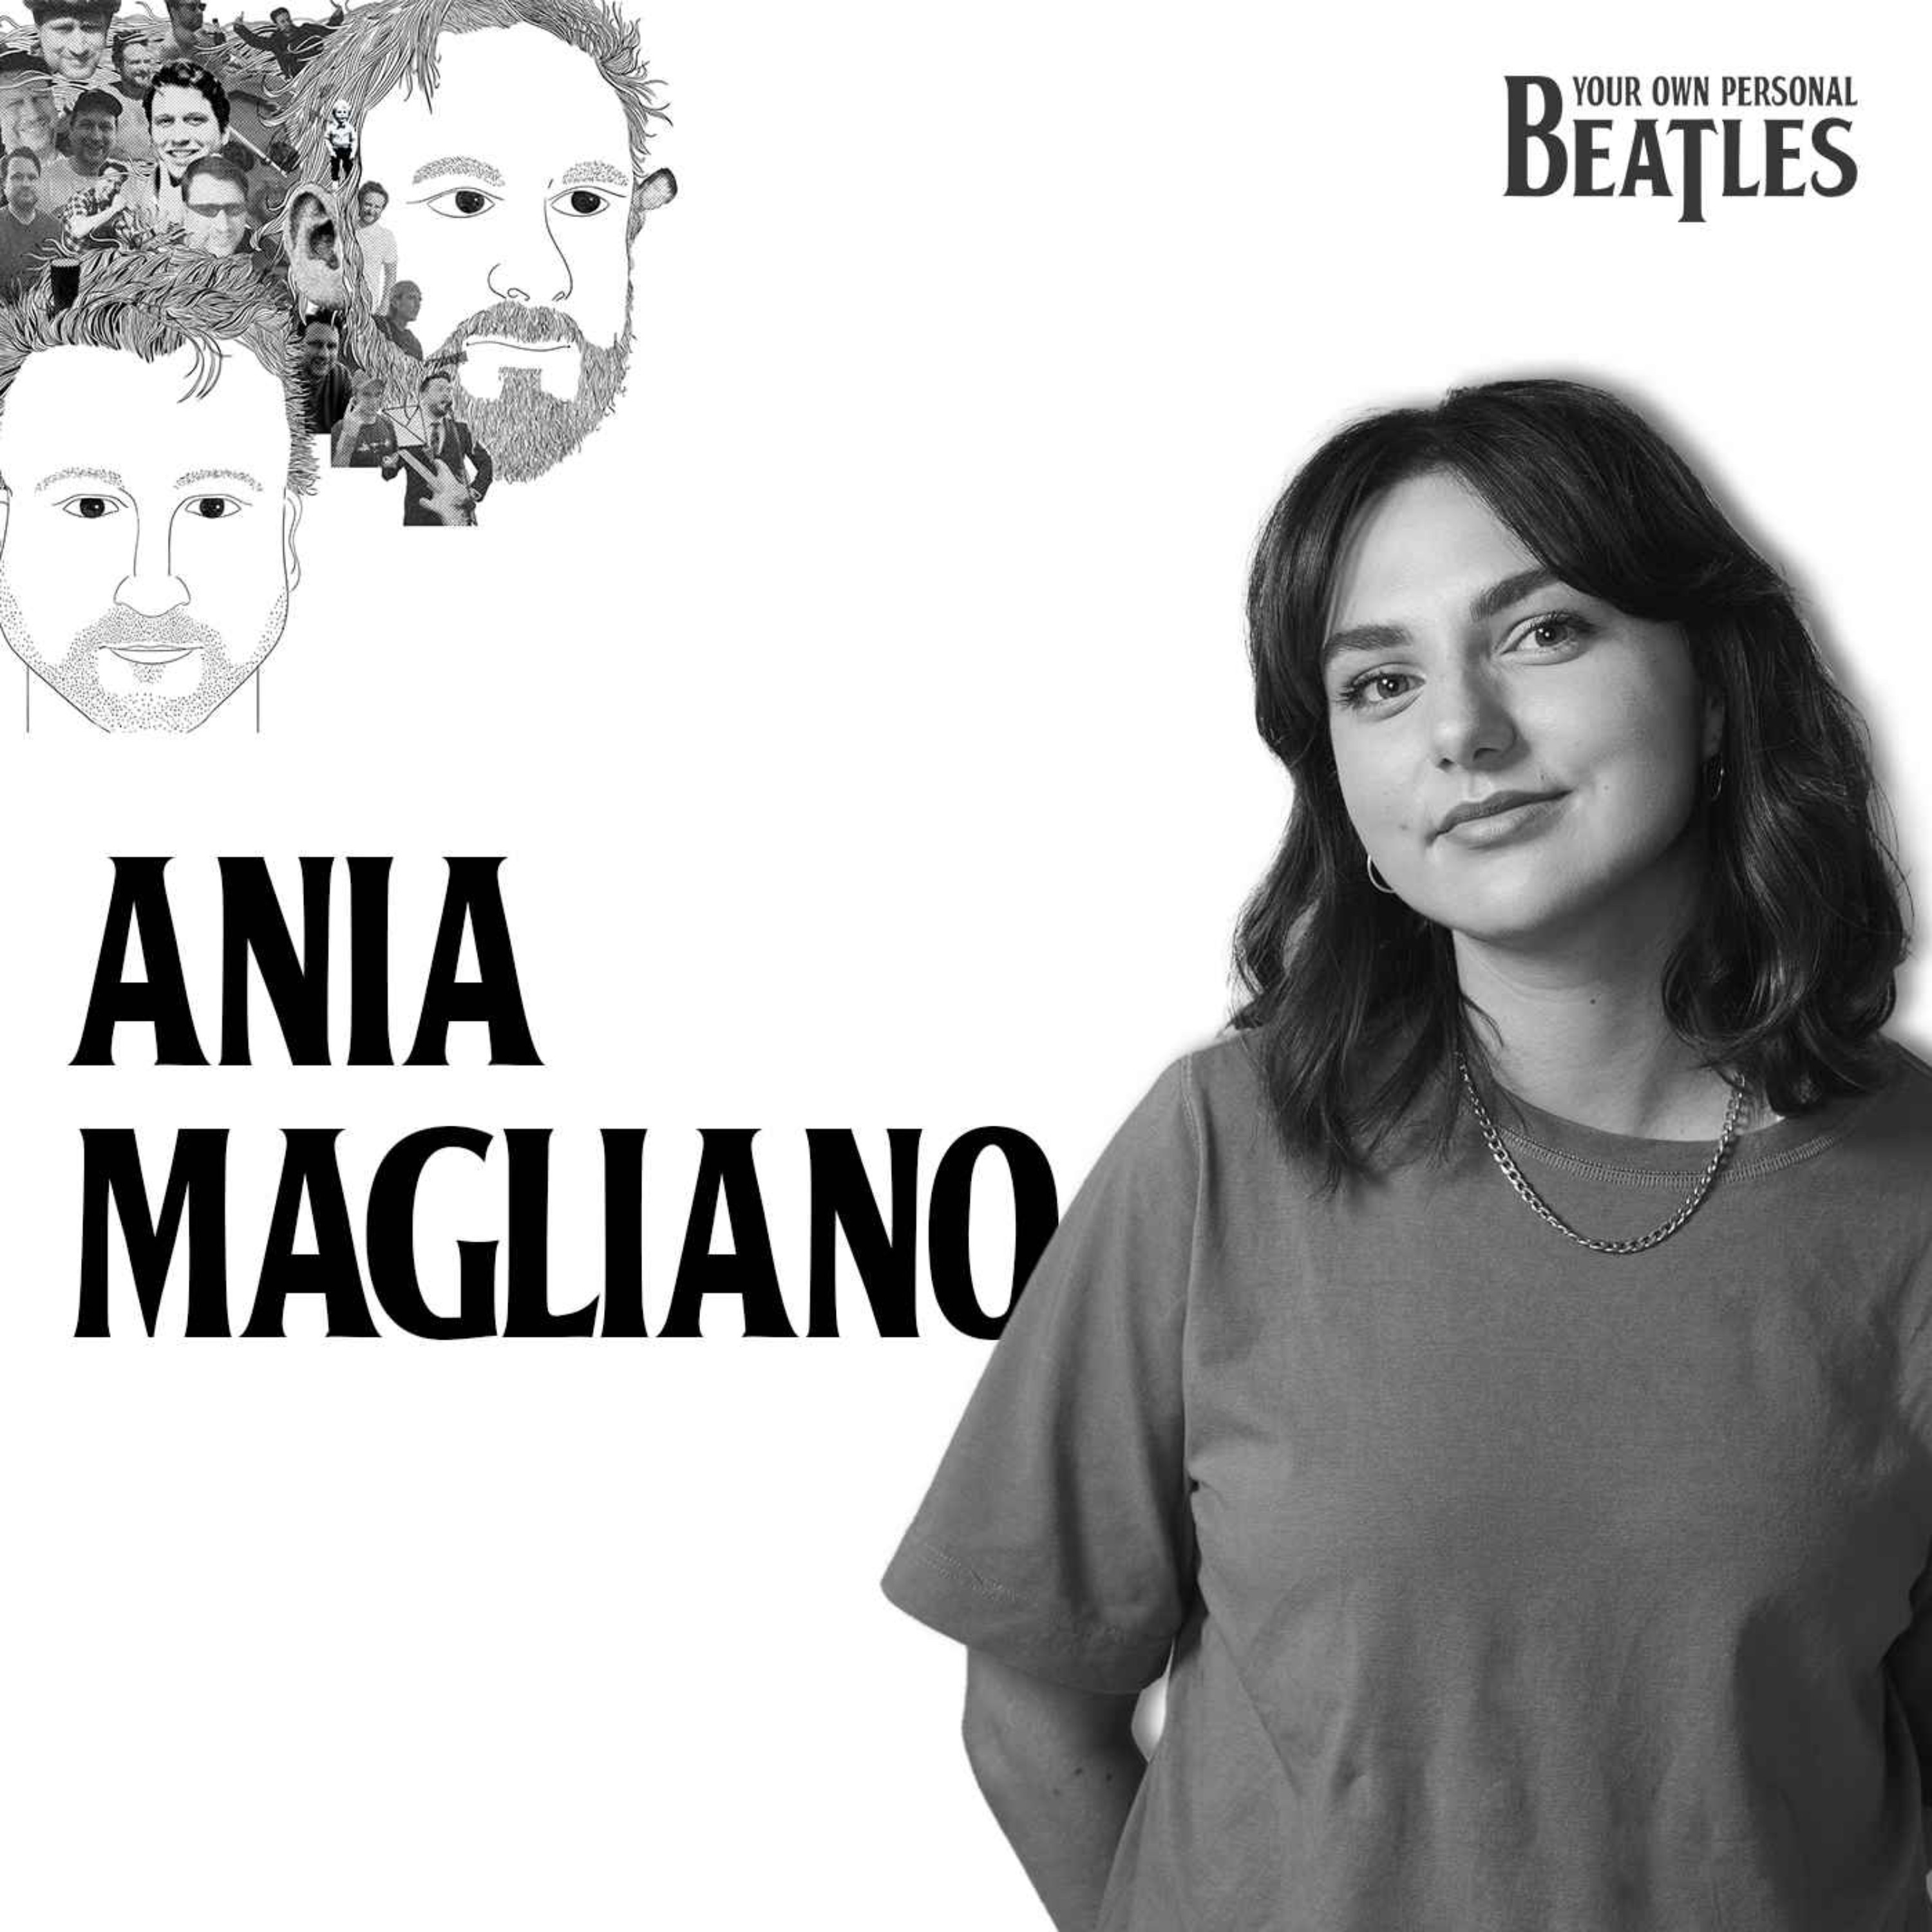 Ania Magliano’s Personal Beatles